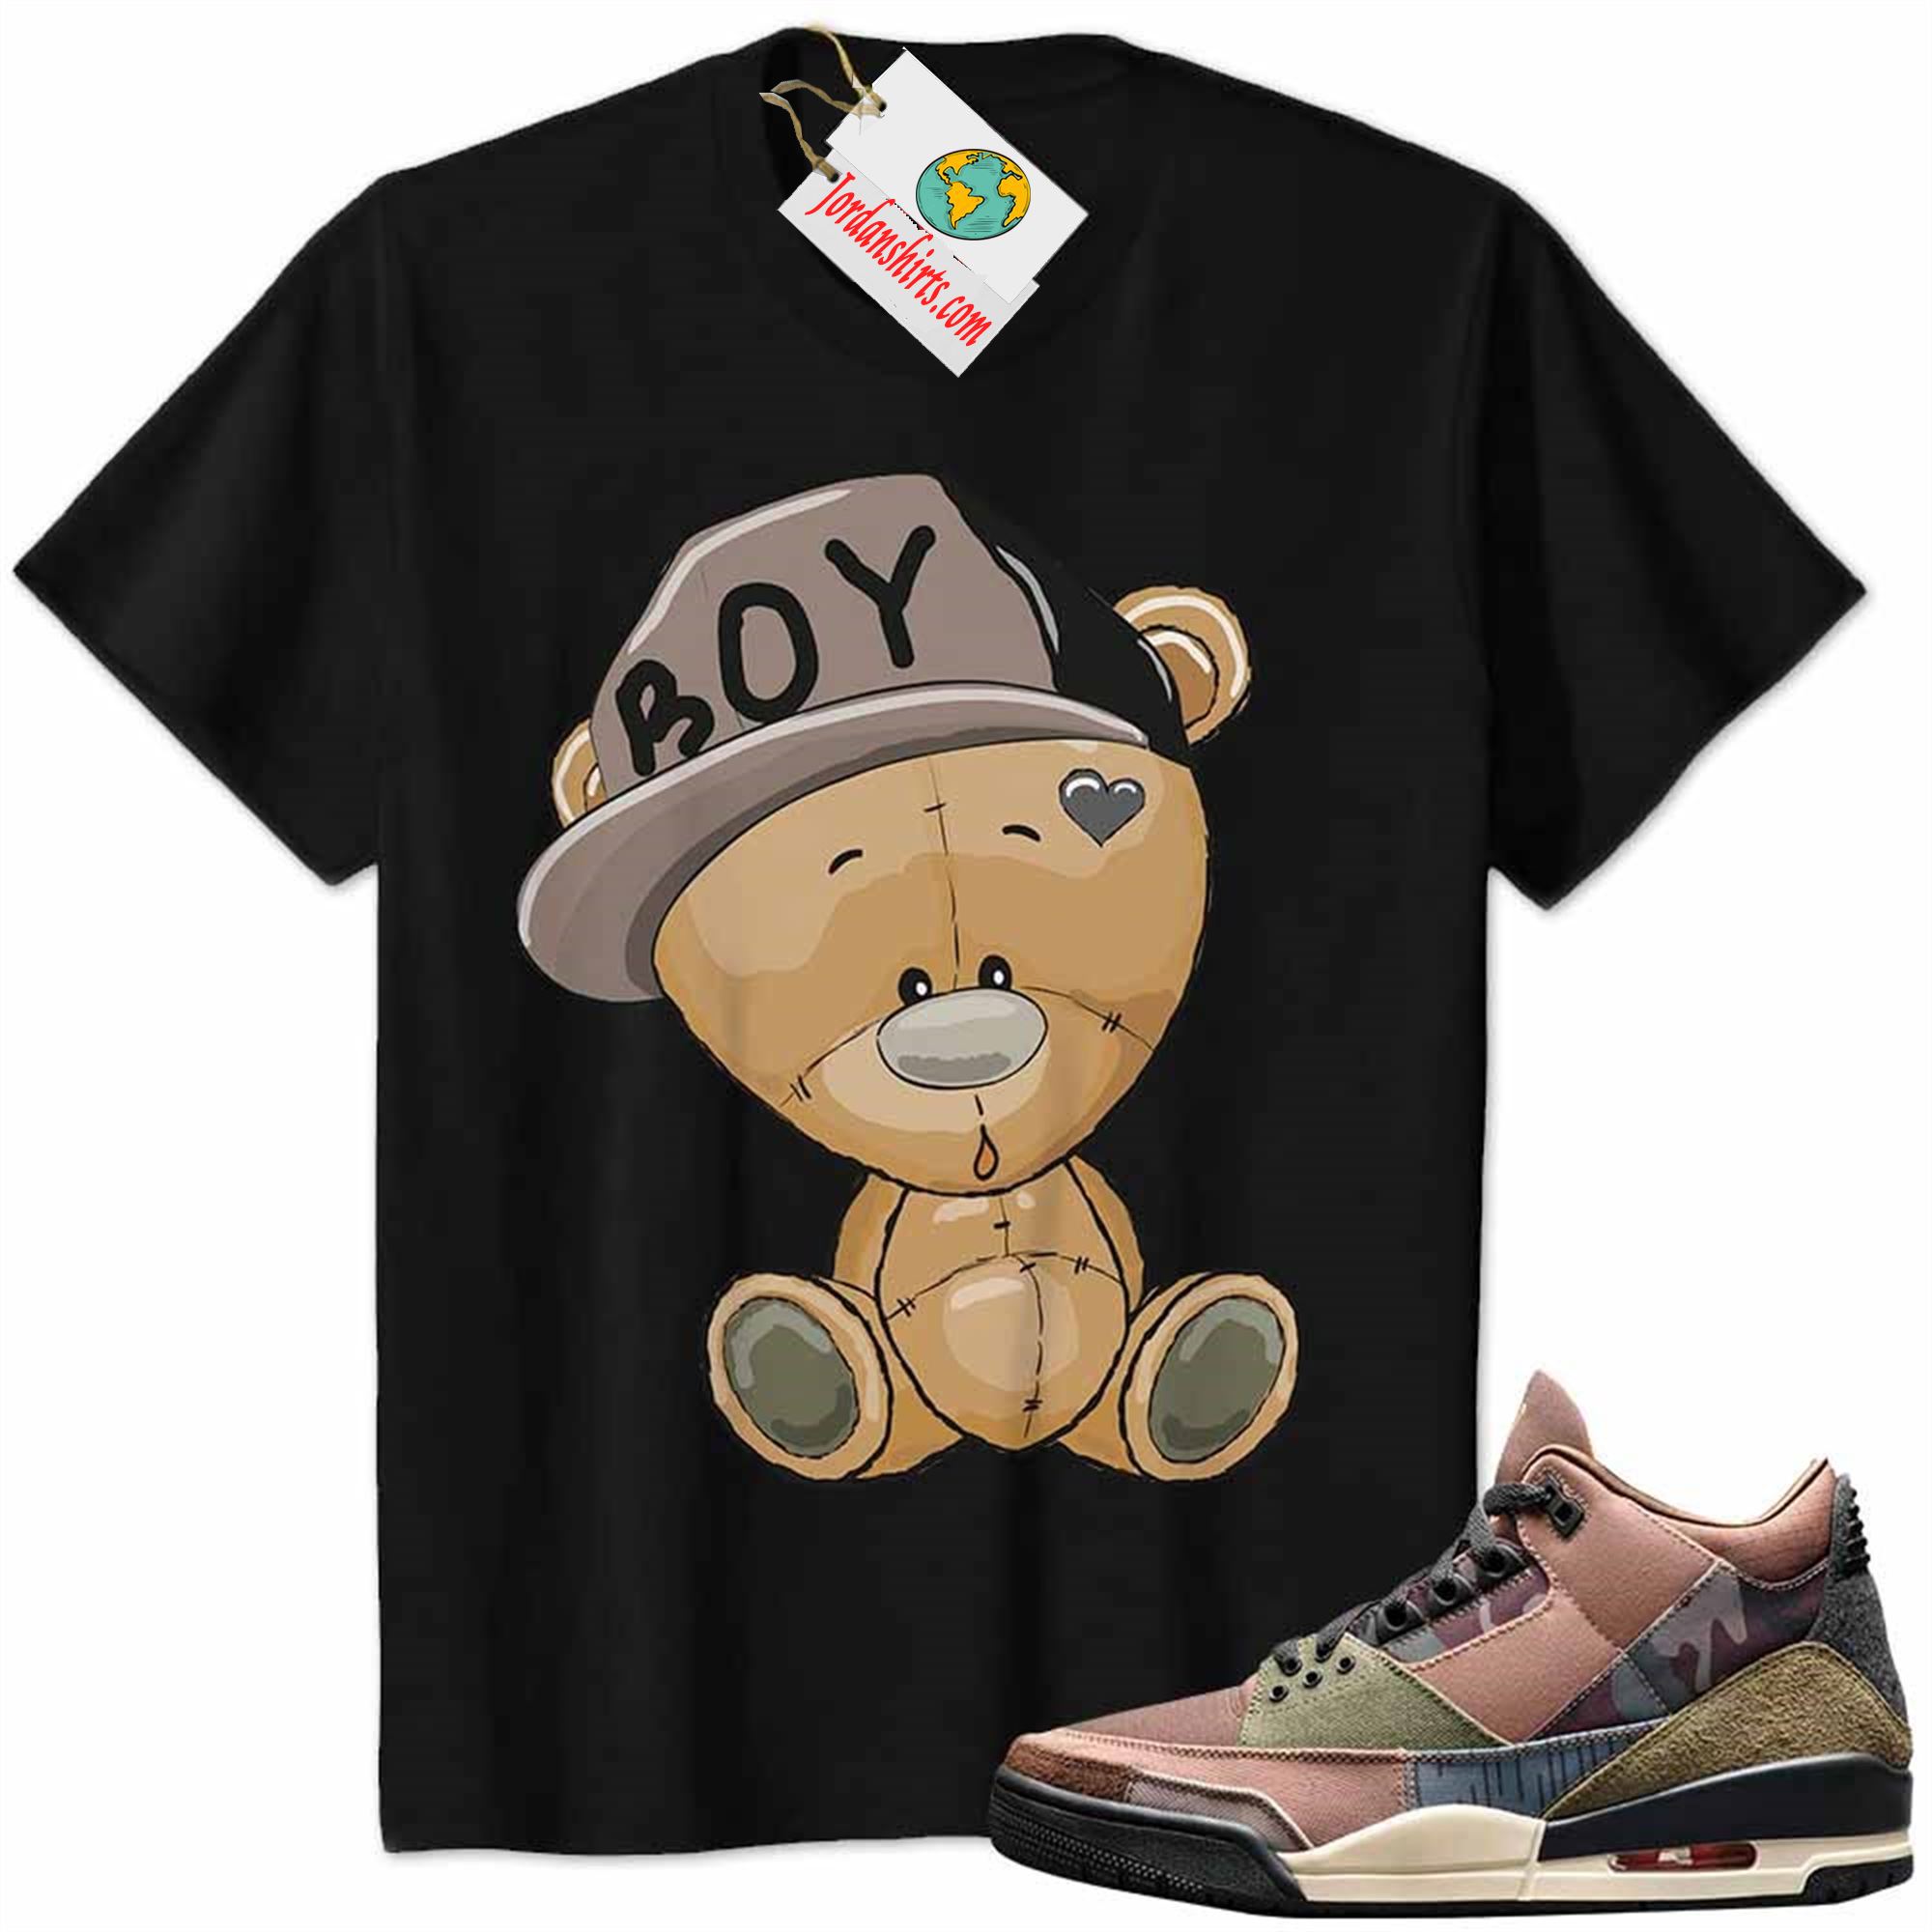 Jordan 3 Shirt, Jordan 3 Patchwork Shirt Cute Baby Teddy Bear Black Size Up To 5xl